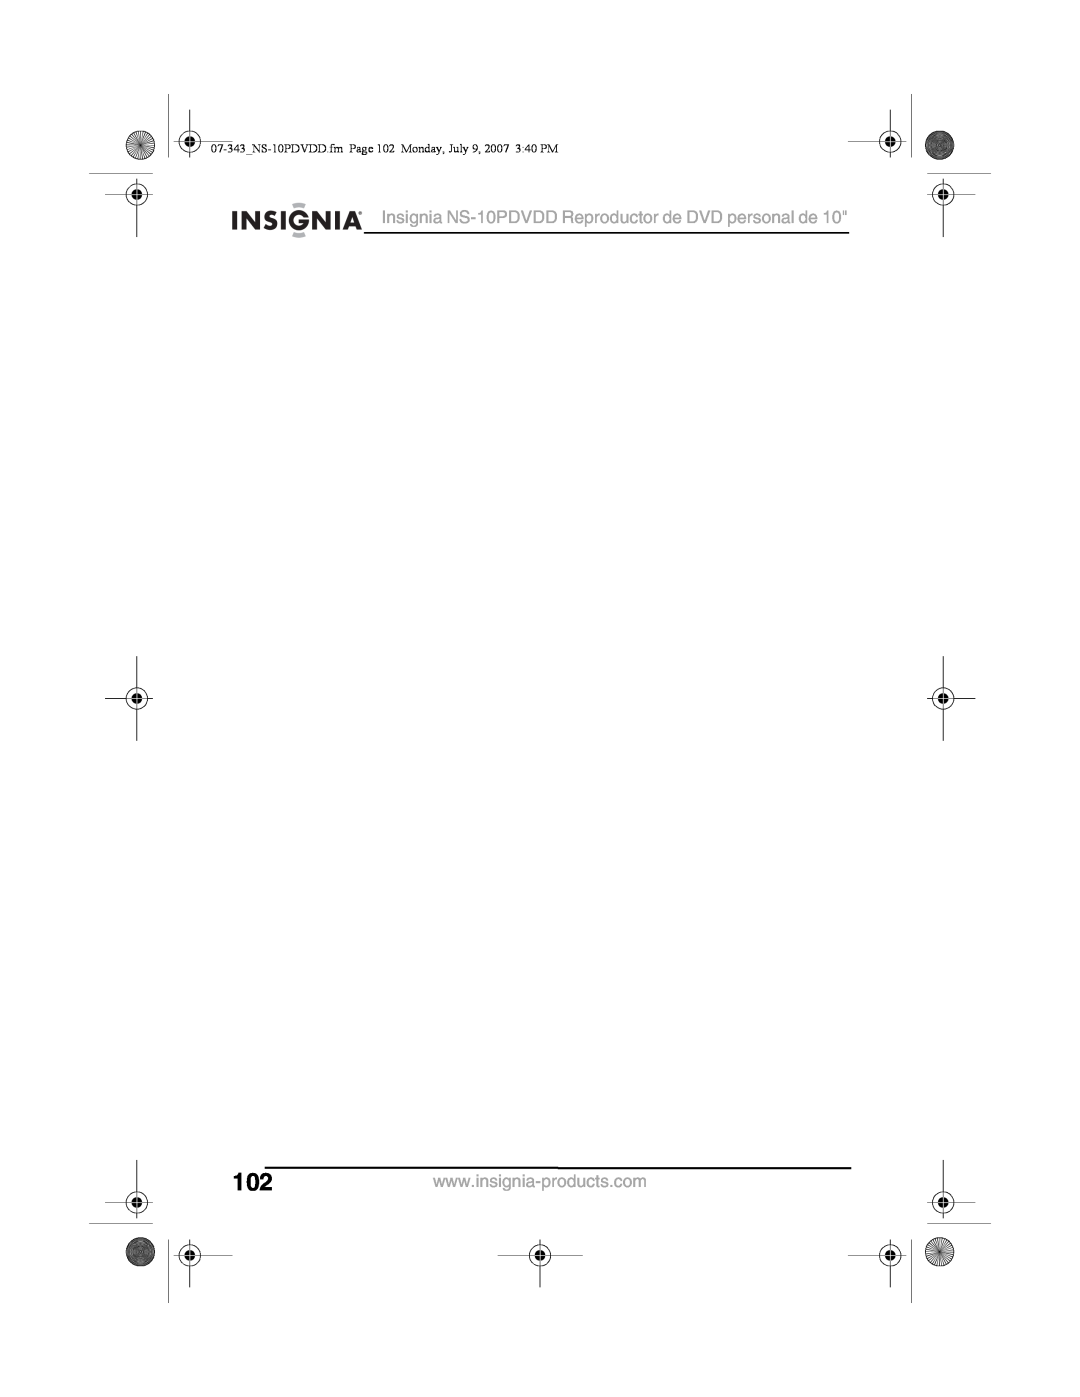 Insignia Insignia NS-10PDVDD Reproductor de DVD personal de, 07-343NS-10PDVDD.fm Page 102 Monday, July 9, 2007 340 PM 